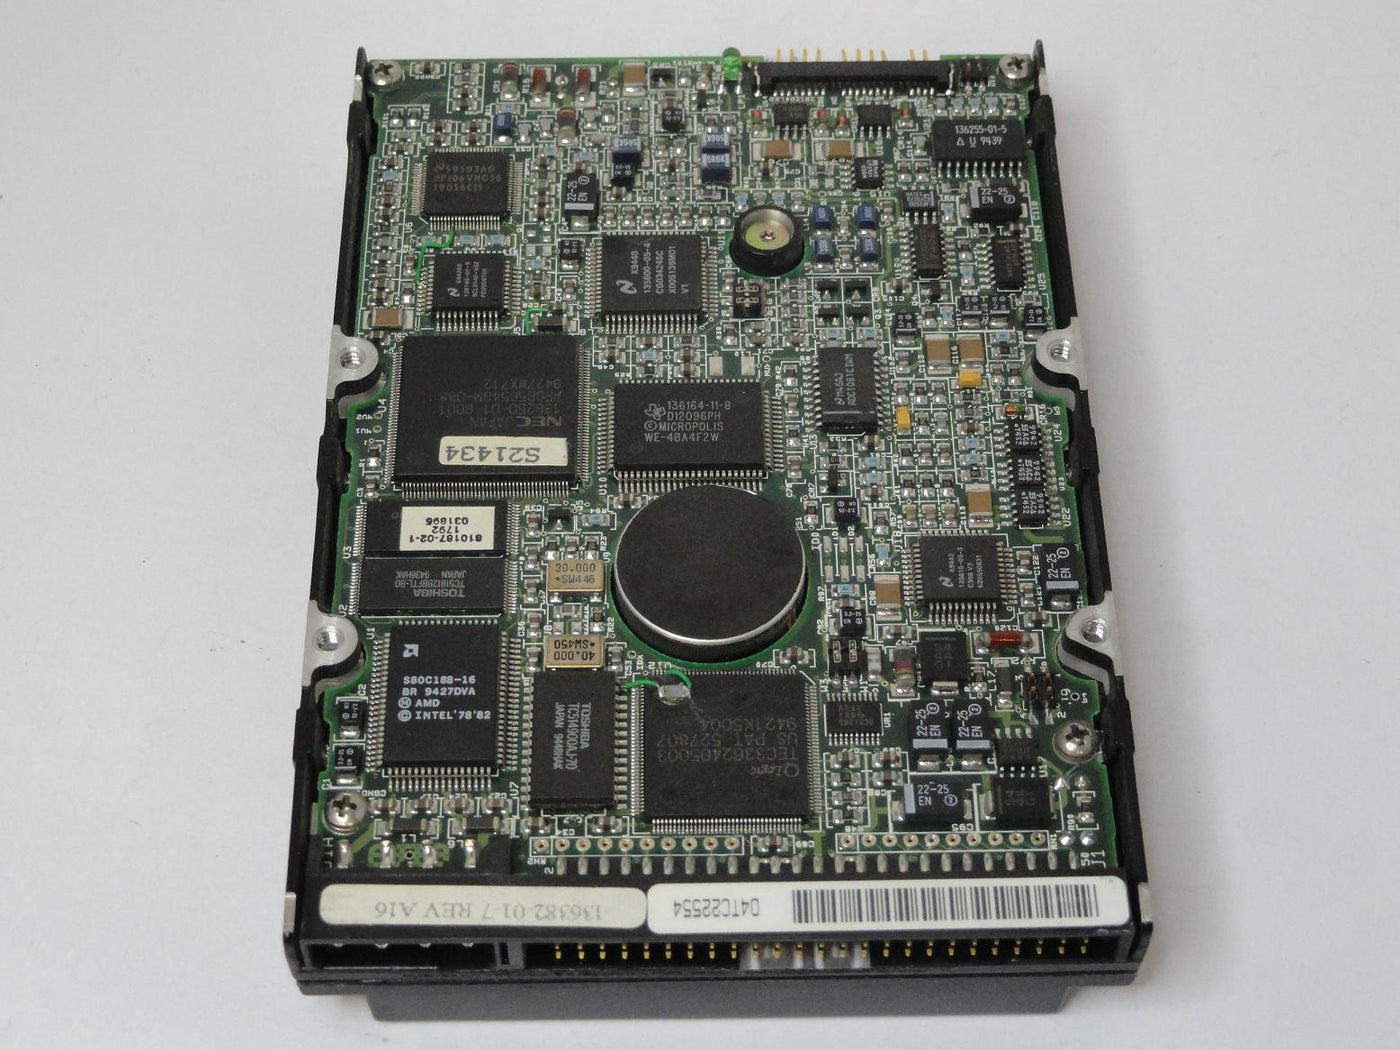 MC1466_TR0054-02-3_Micropolis 1GB SCSI 50 Pin 5400rpm 3.5in HDD - Image2